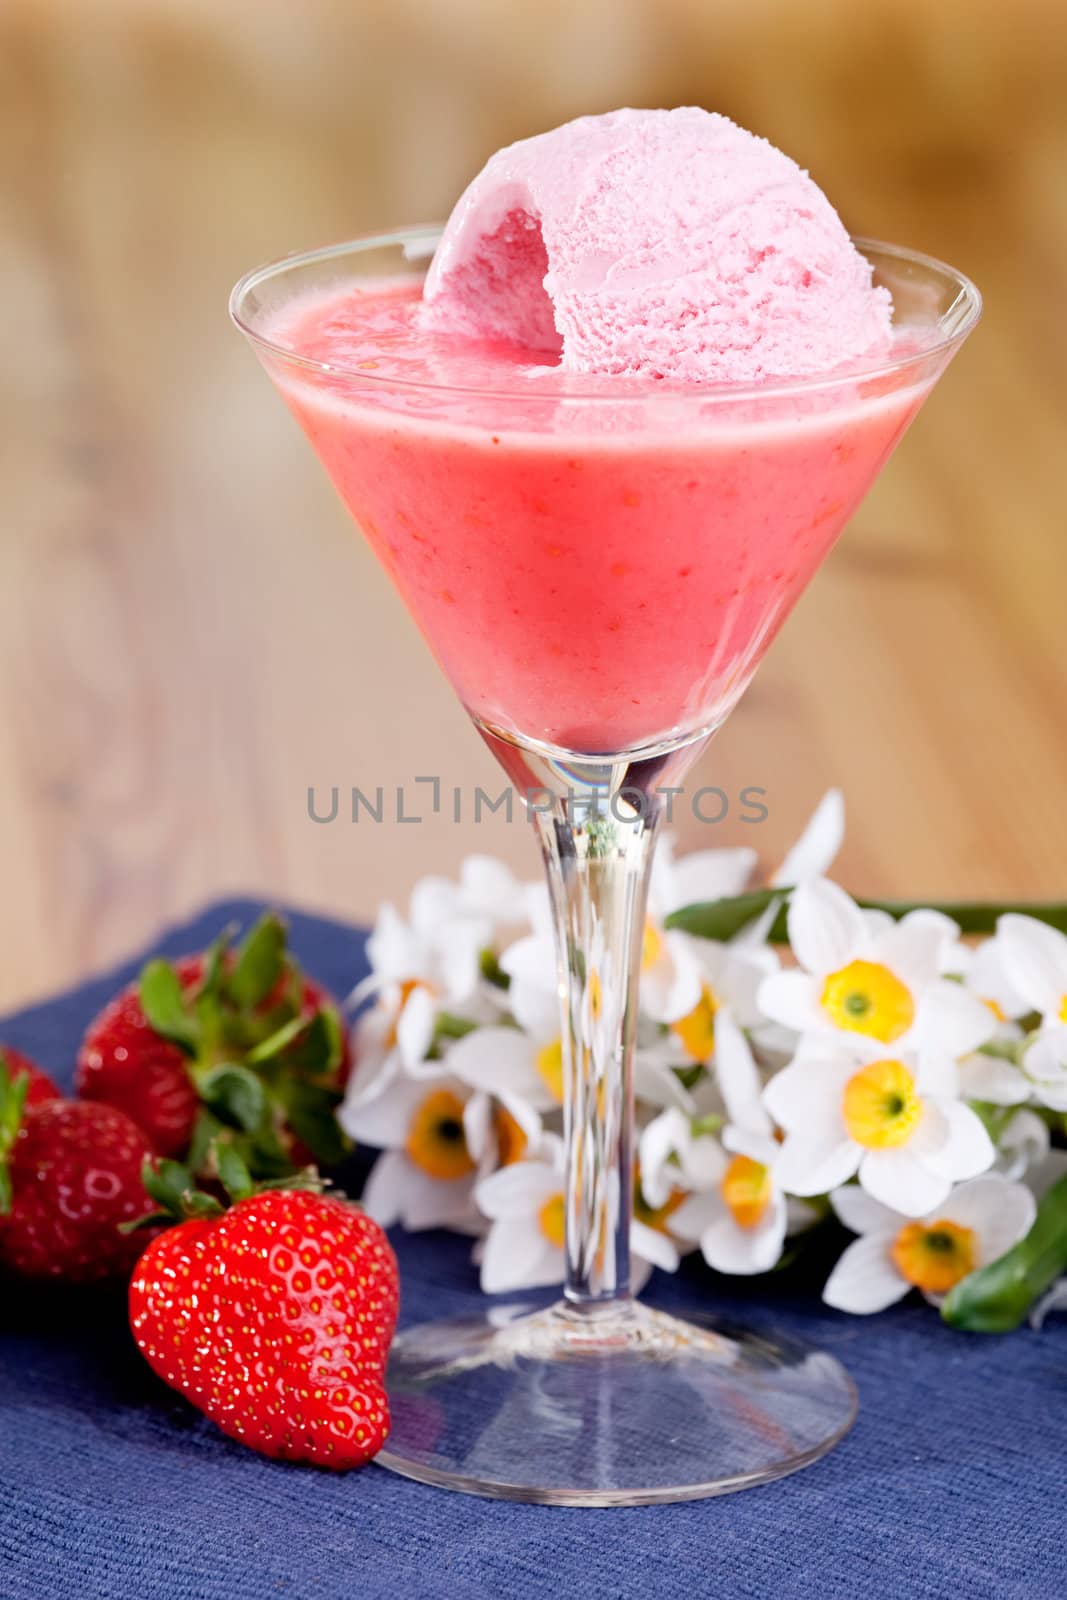 A summer treat - strawberry ice cream smoothie